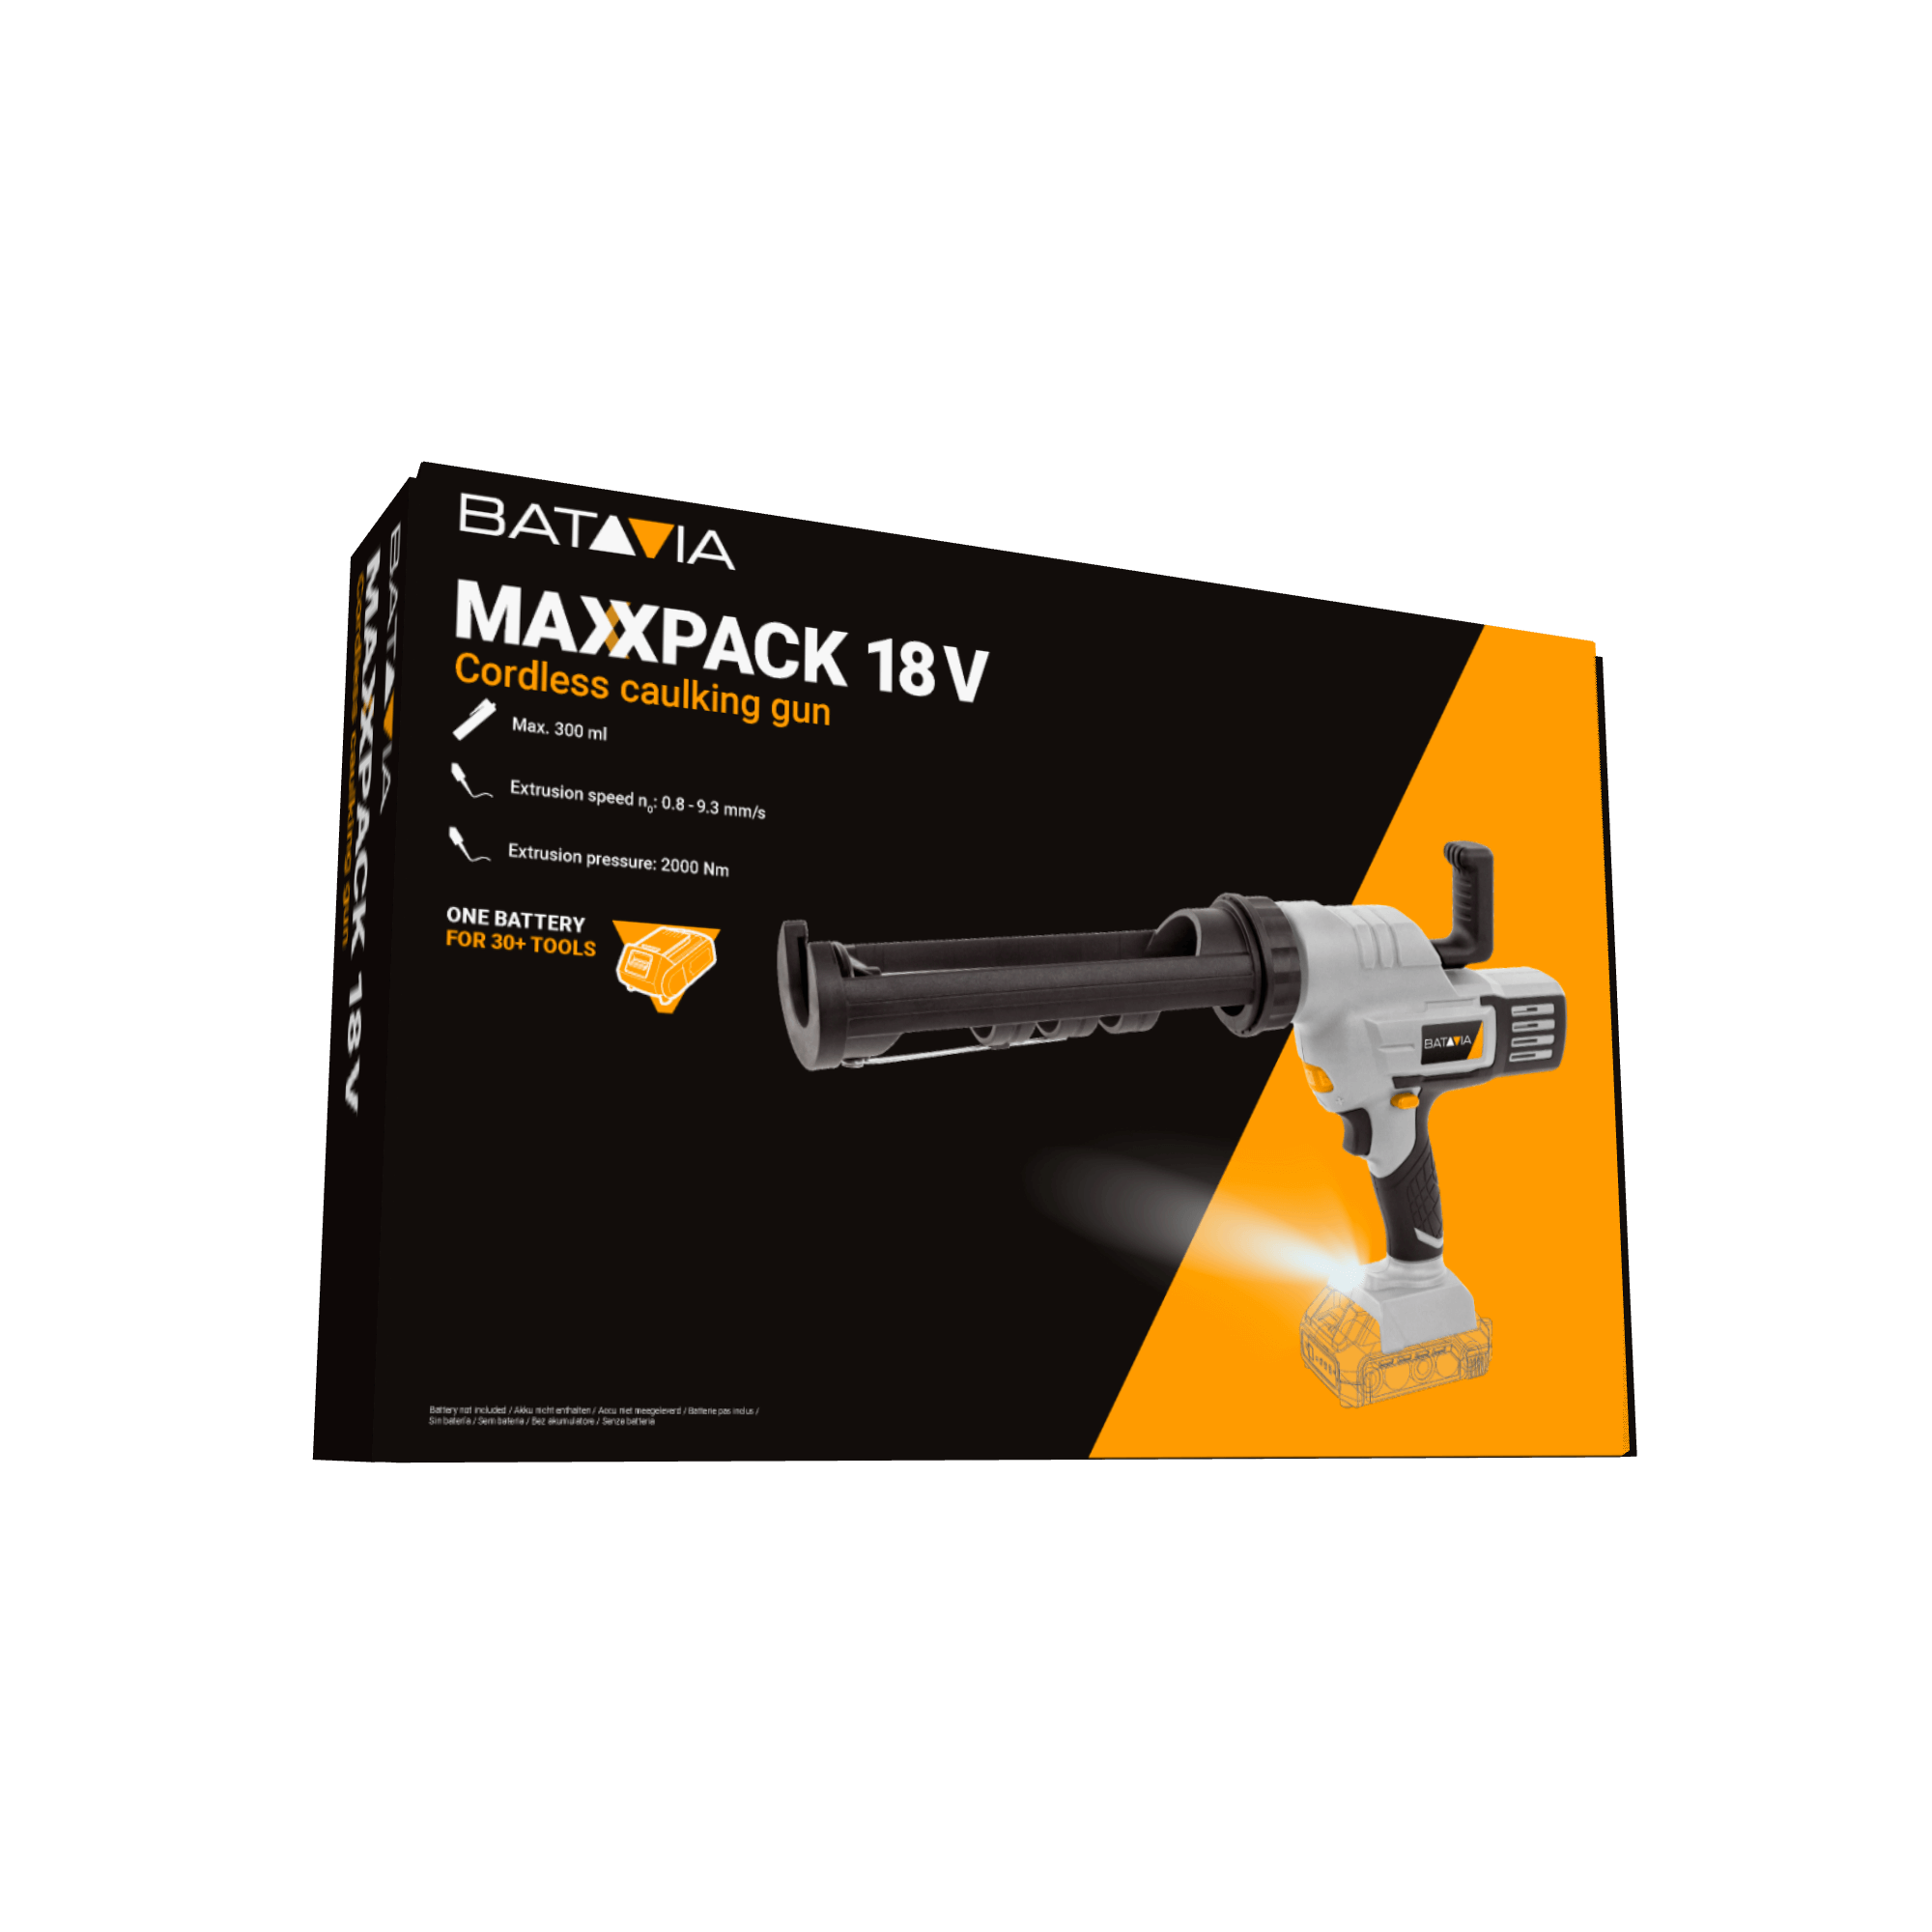 Packaging Electric Caulking Gun | Maxxpack collection | Batavia